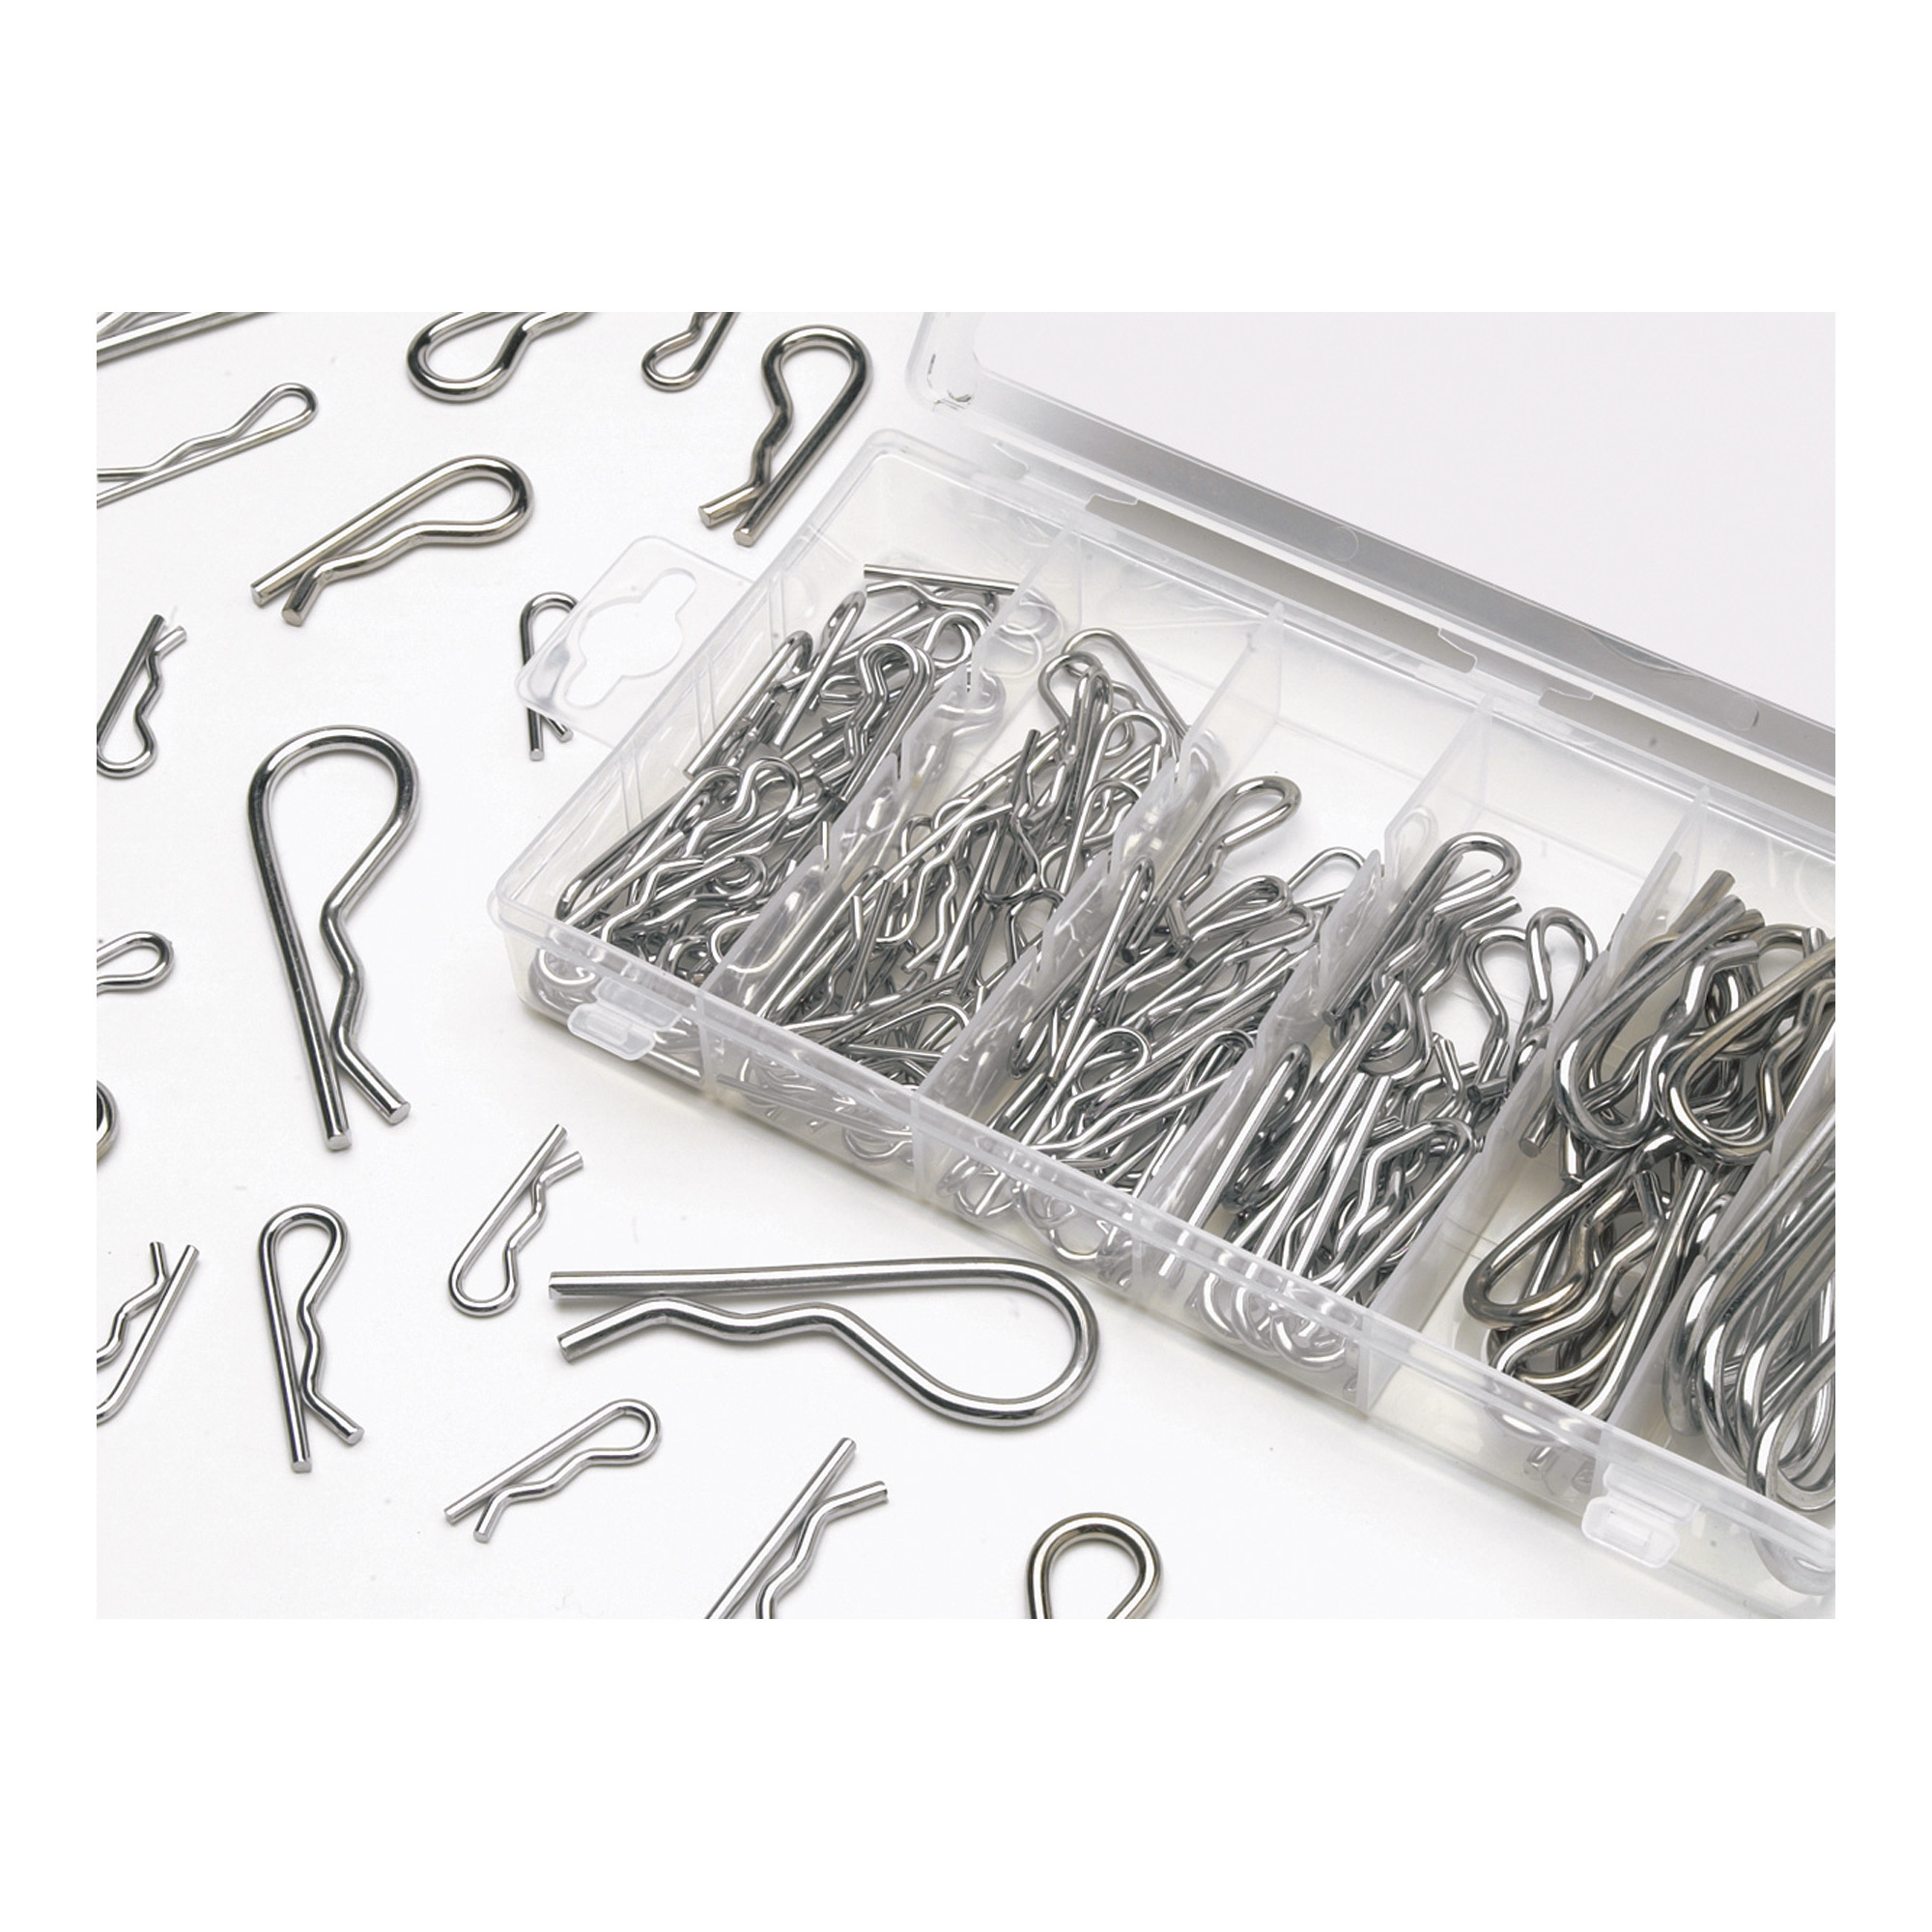 UST Hair Pins, 150-Piece Set, Model W5210